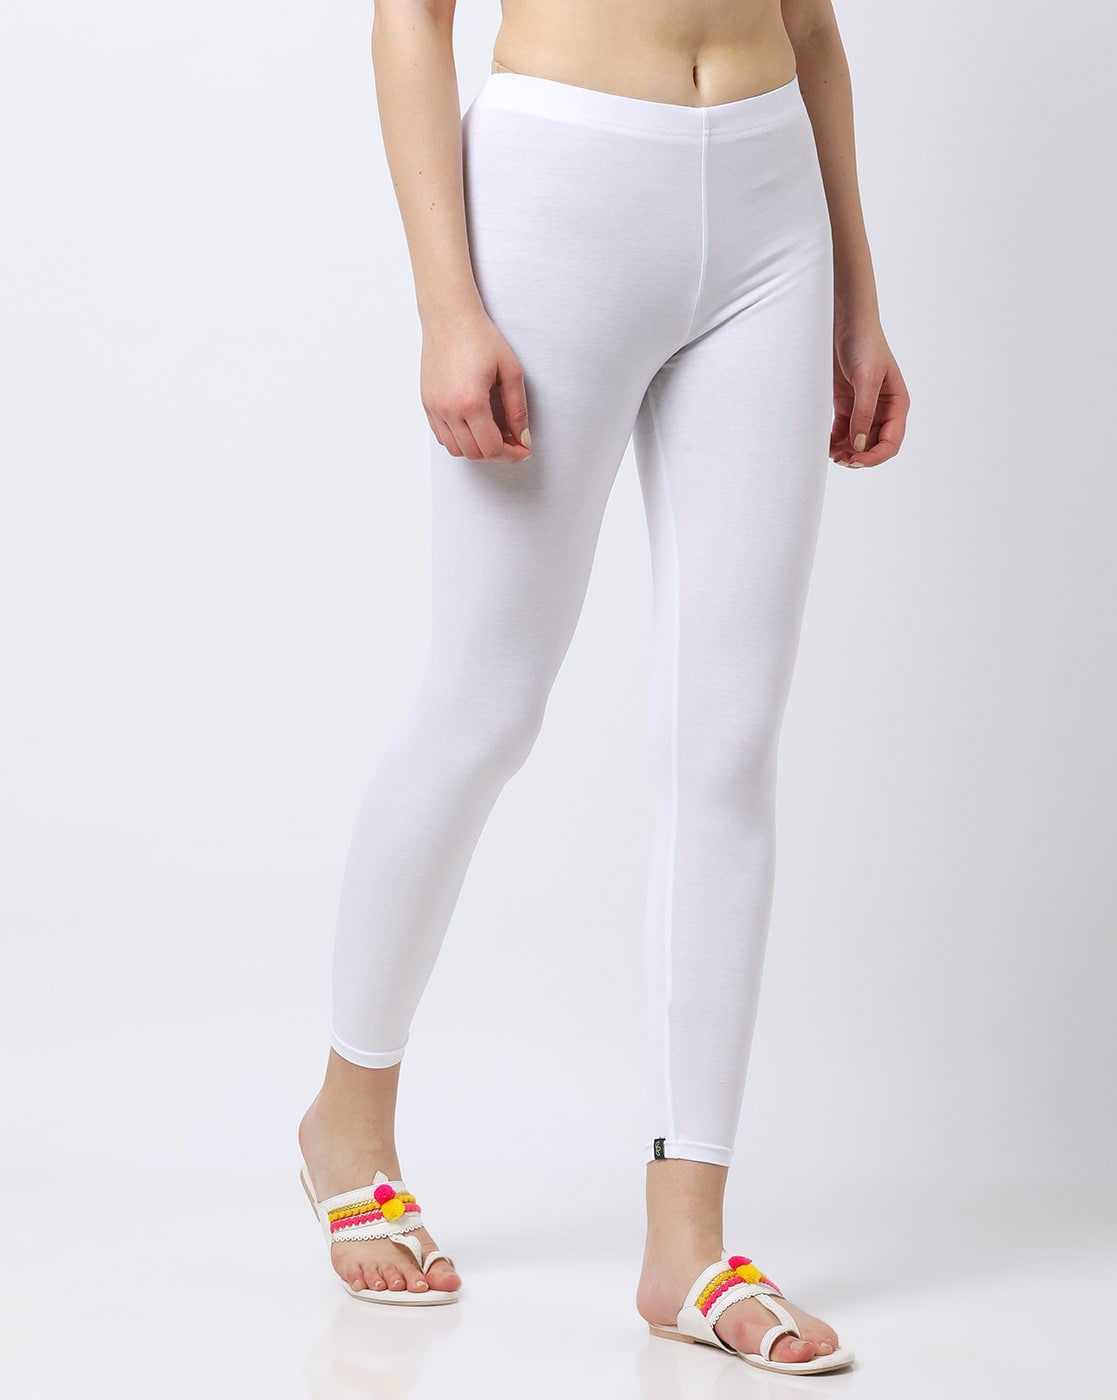 Preserve more than 142 white leggings women super hot